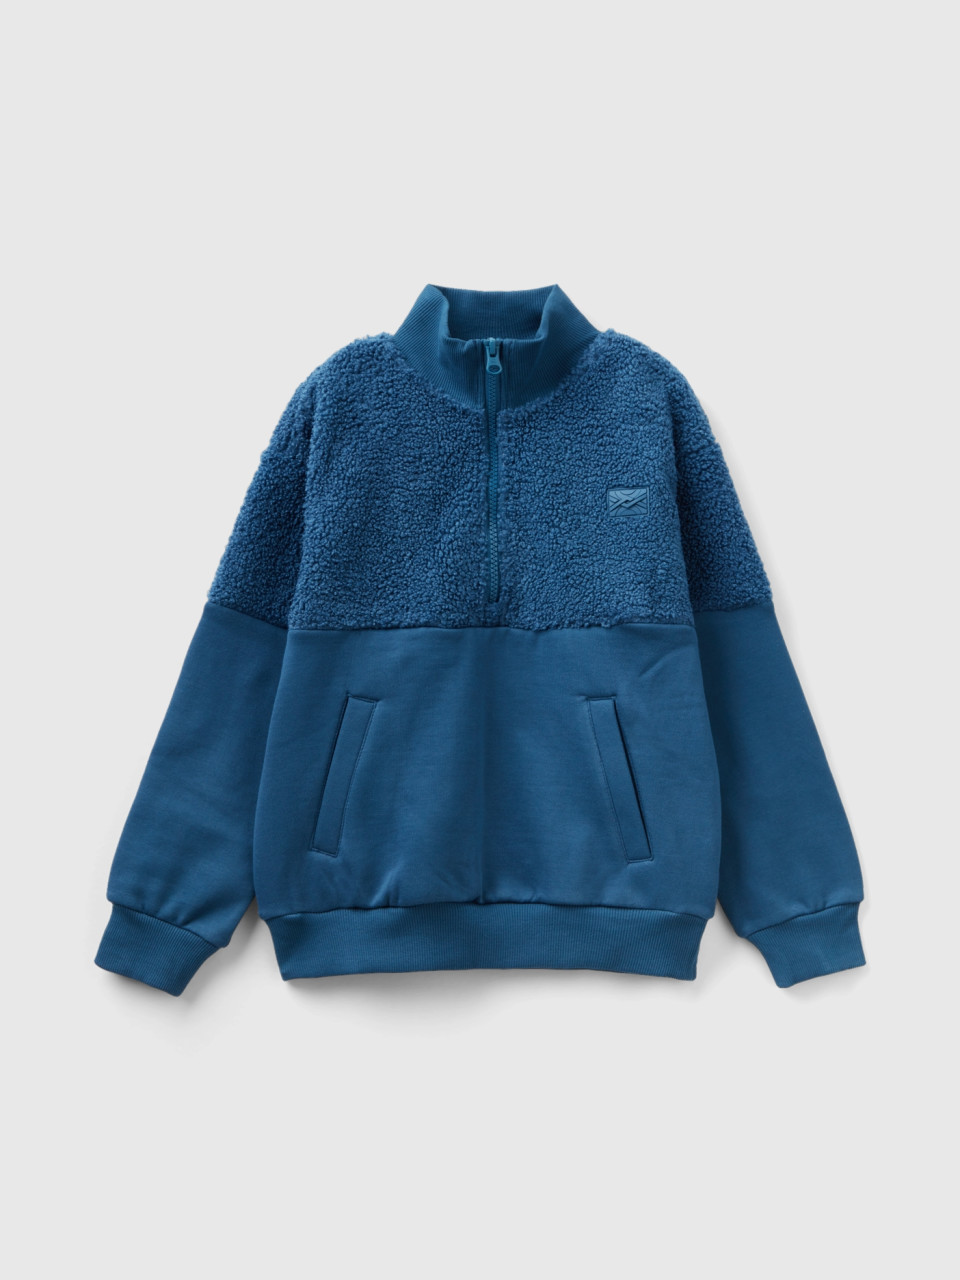 Benetton, Warm Half-zip Sweatshirt, Air Force Blue, Kids